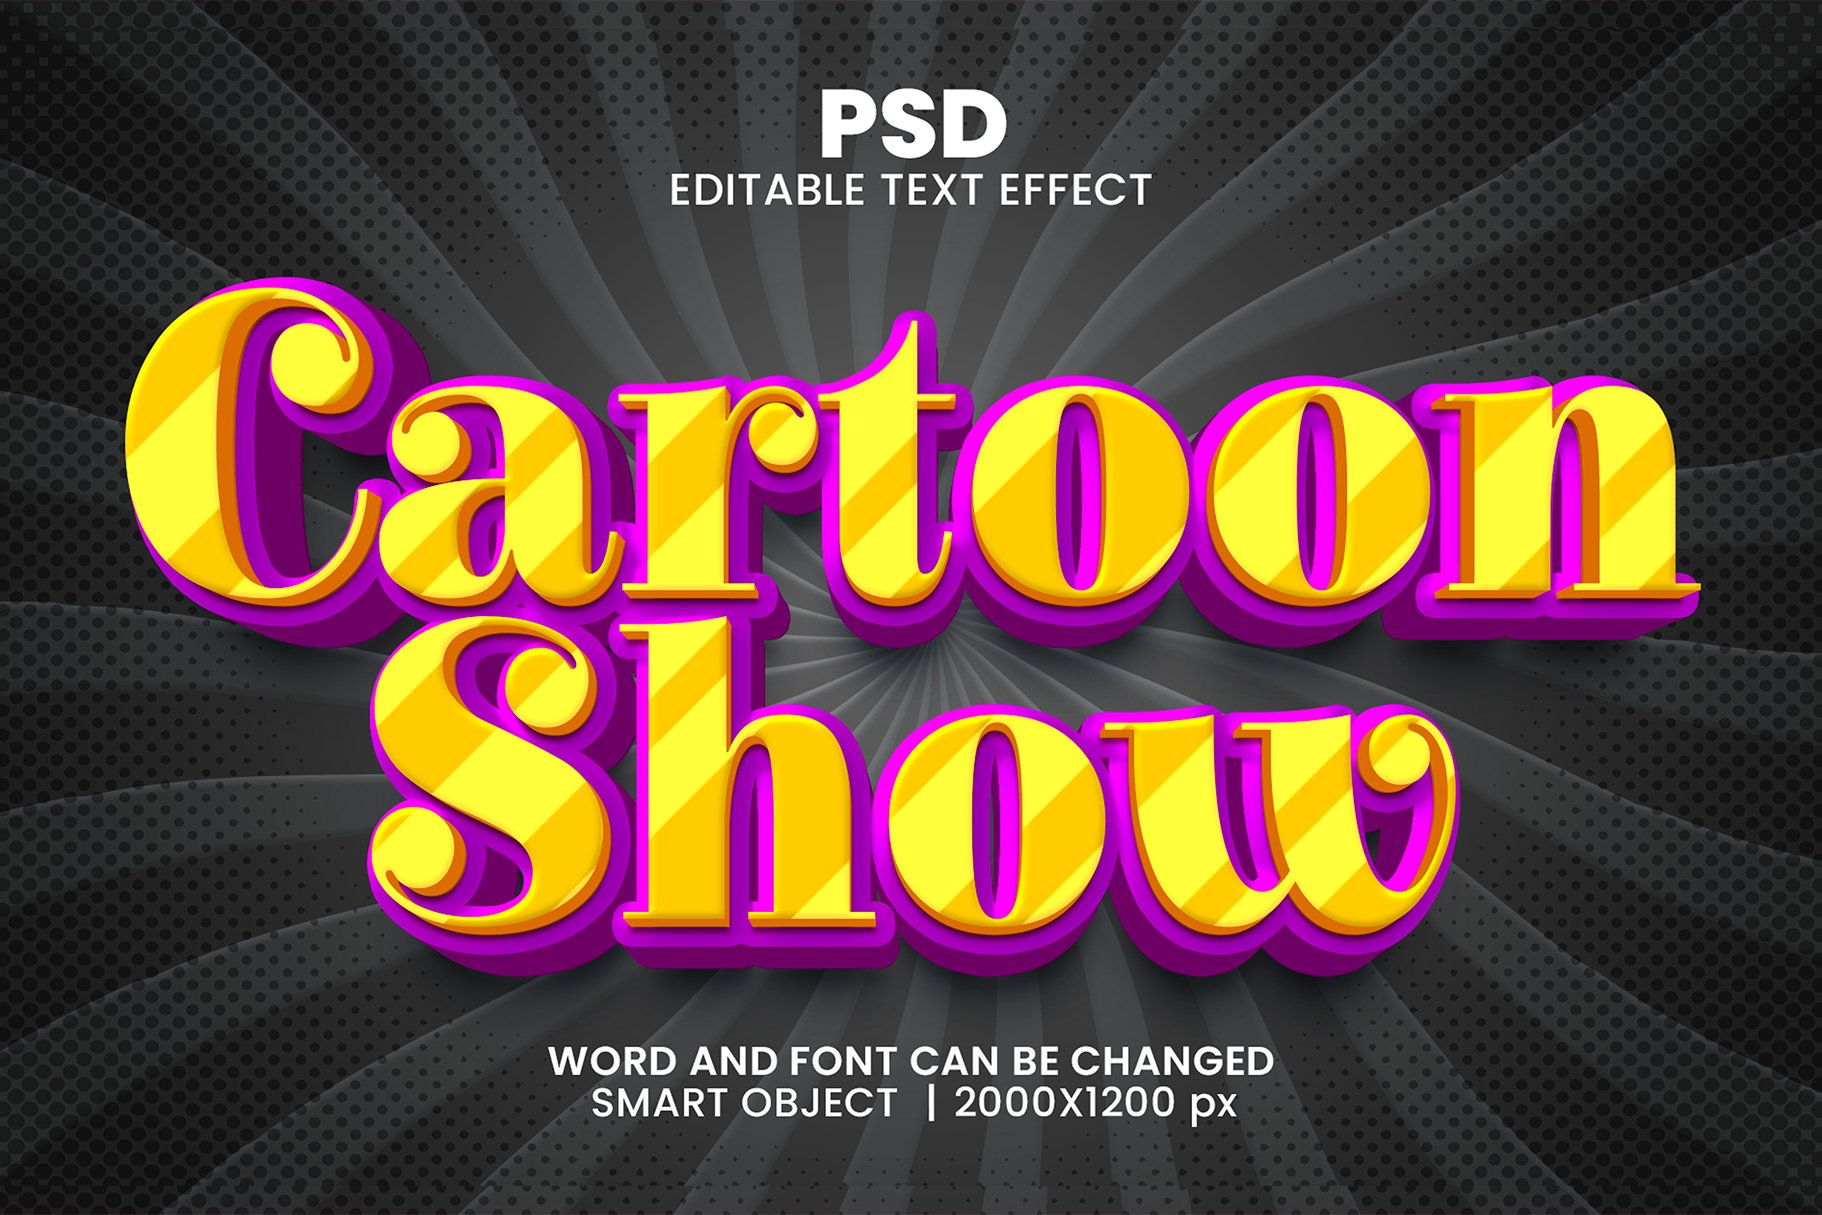 Cartoon show 3d Text Effect Stylecover image.